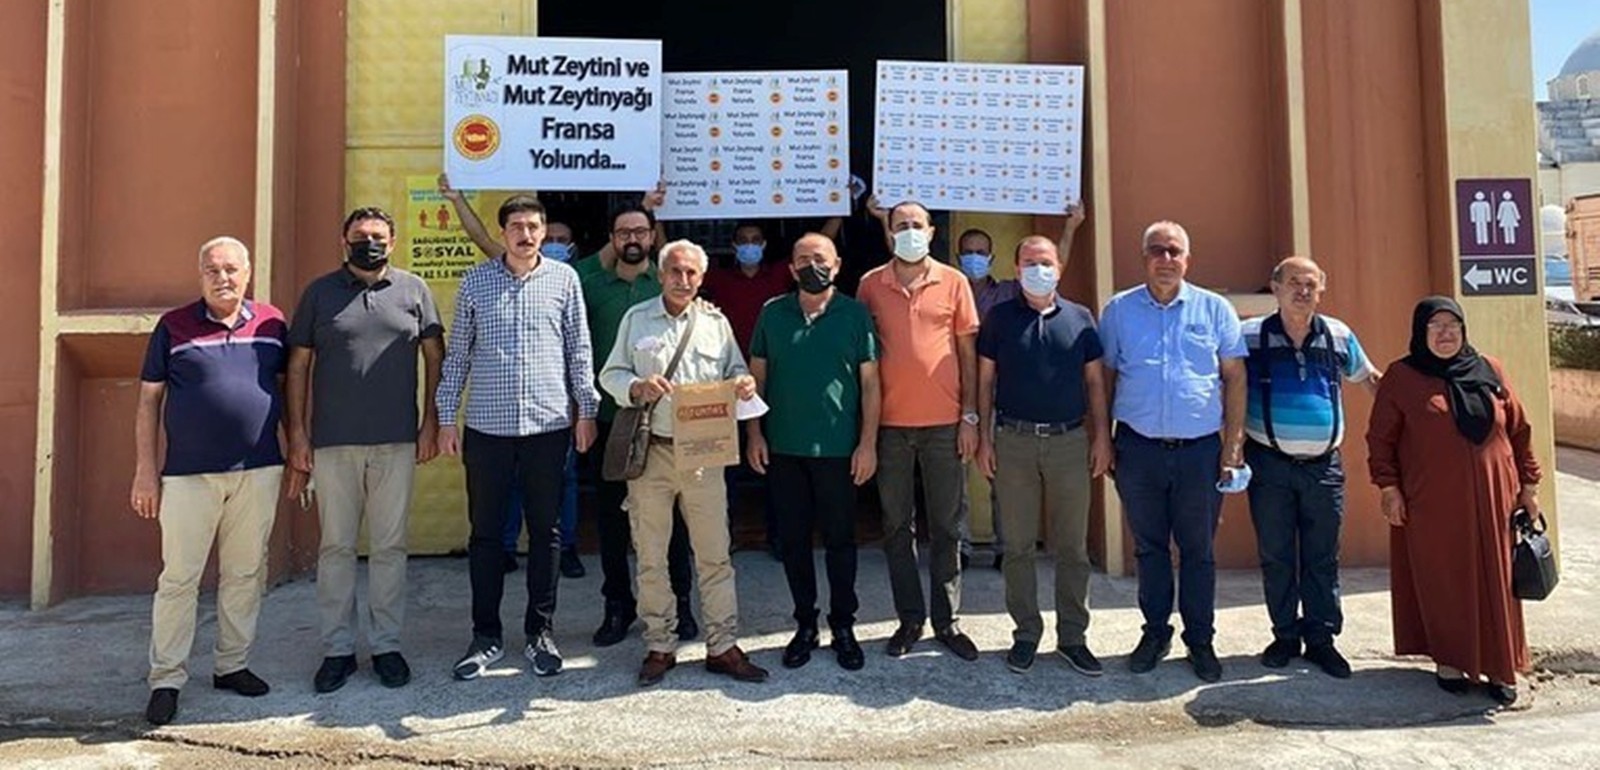 22 bin litre mut zeytinyagi fransaya ihrac edildi